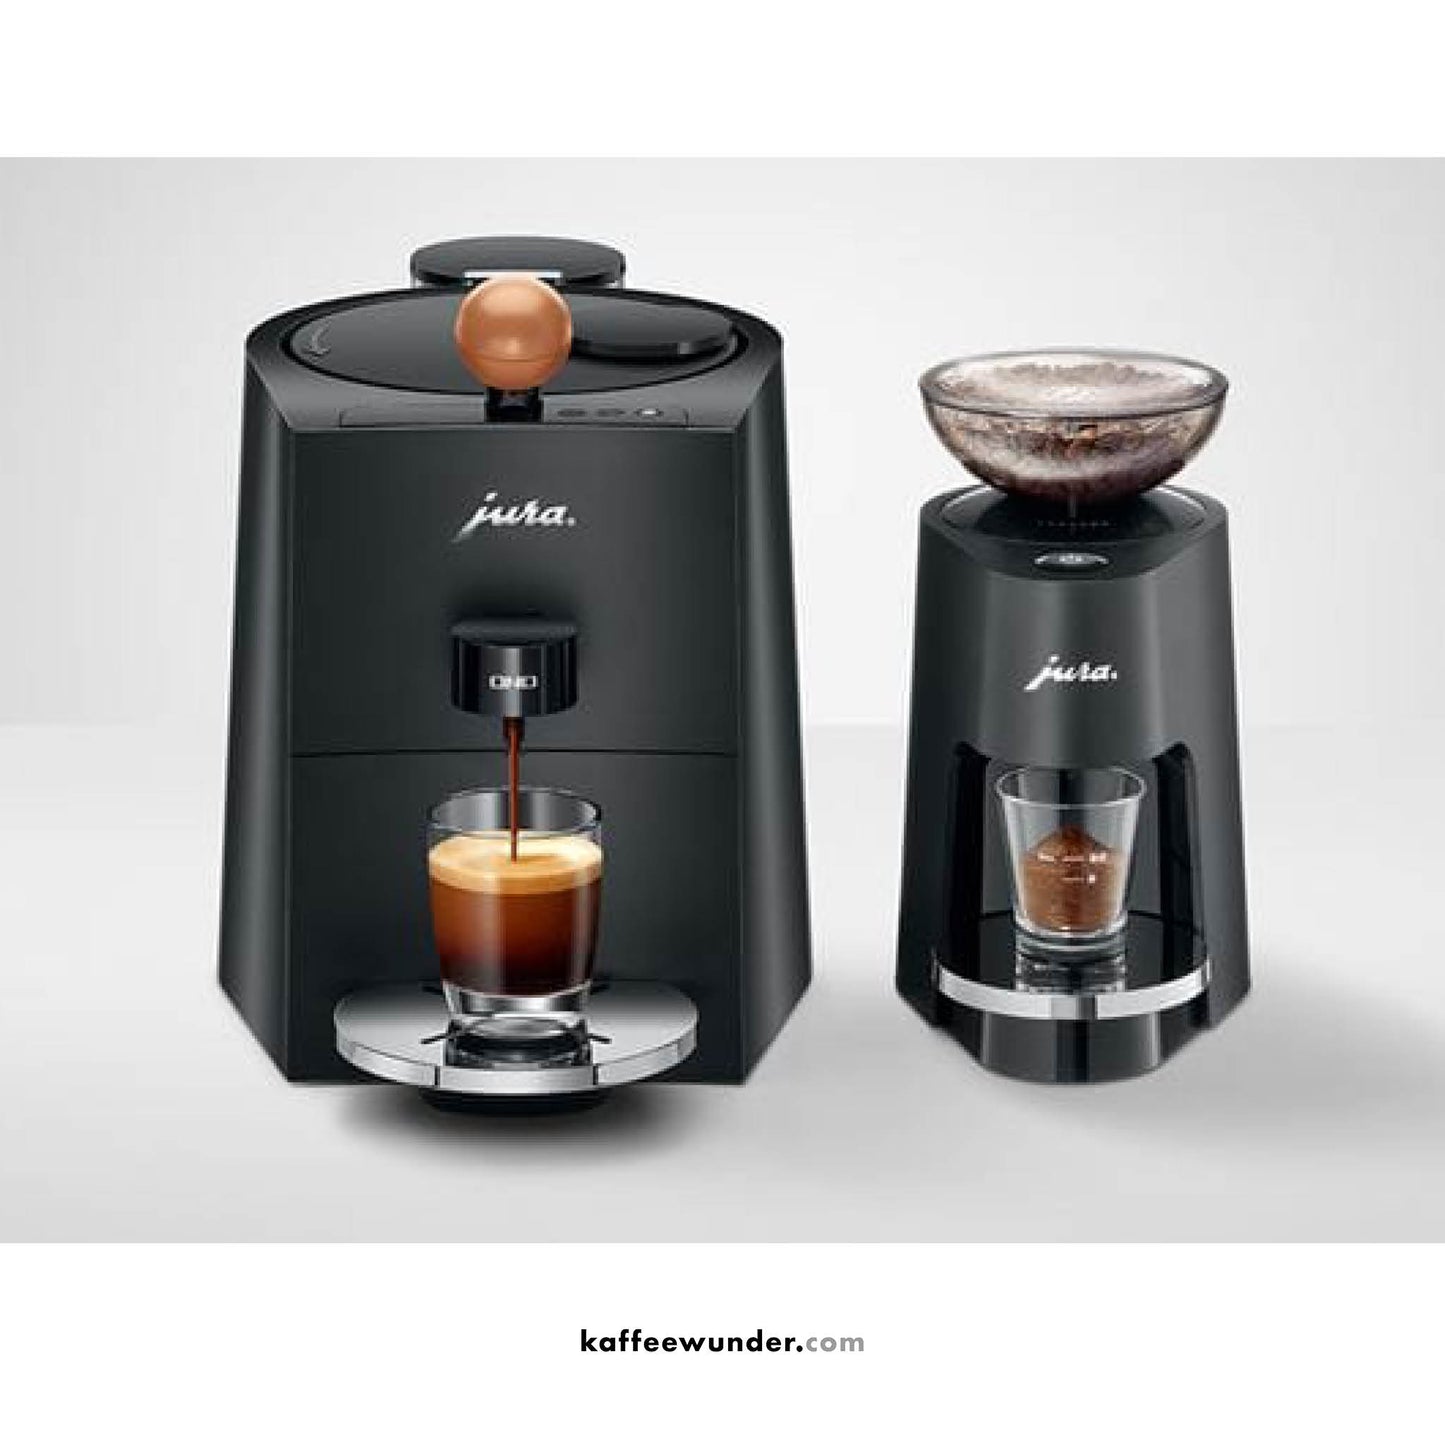 Jura ONO / Espressomaschine inkl. gratis Kaffee & Espressotassen